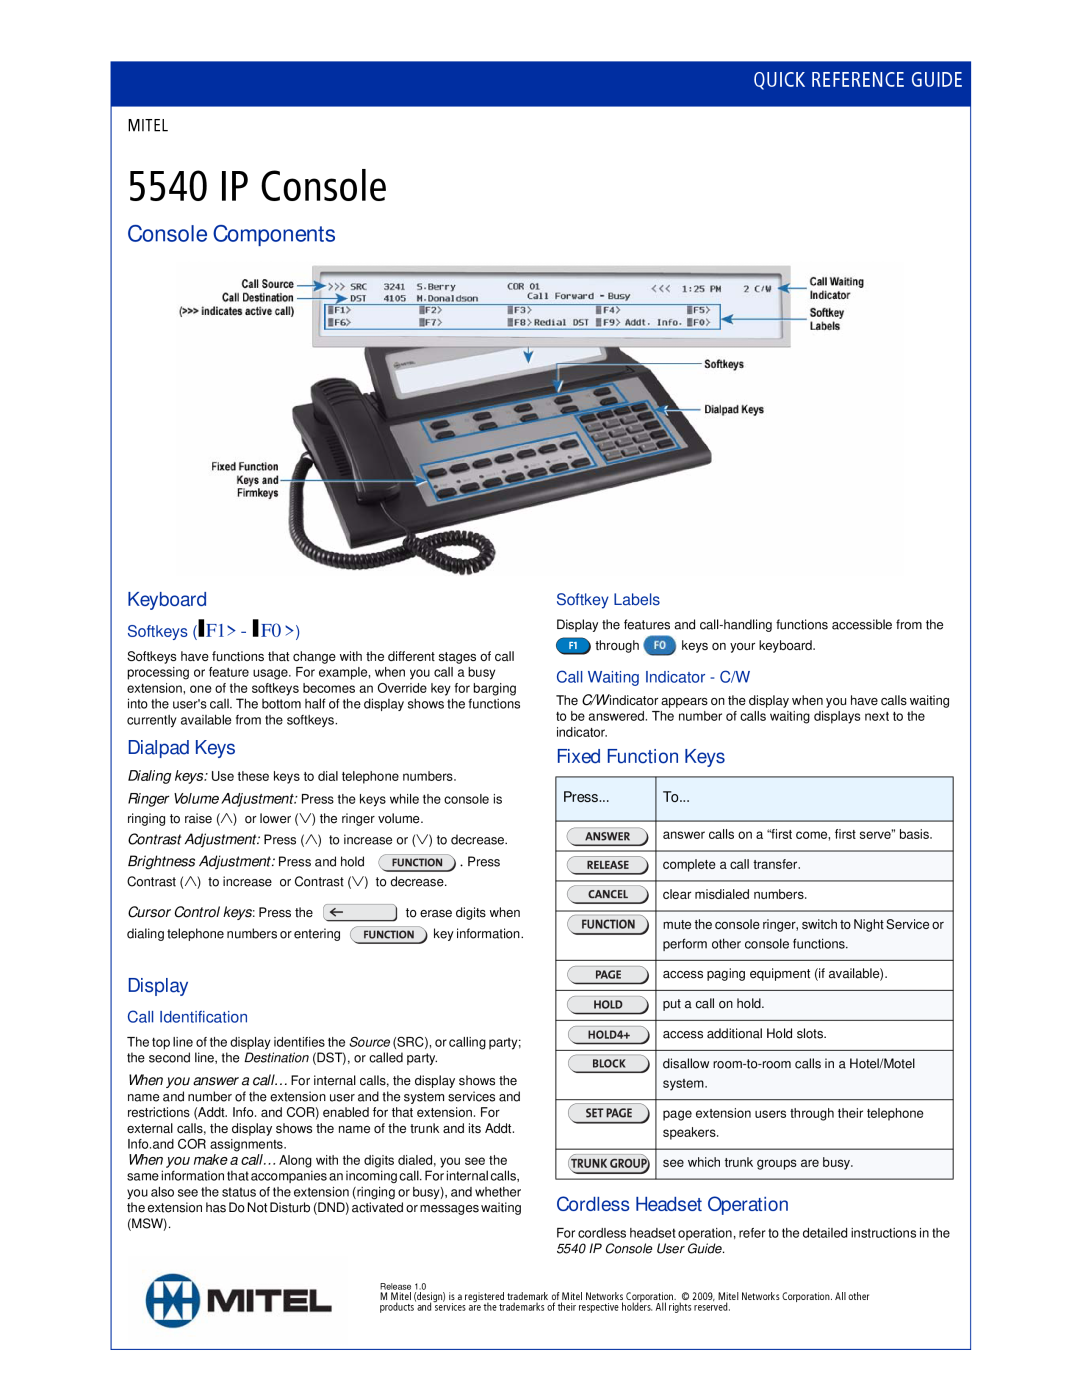 Mitel 5540 manual IP Console, User Guide Release, Mitel 